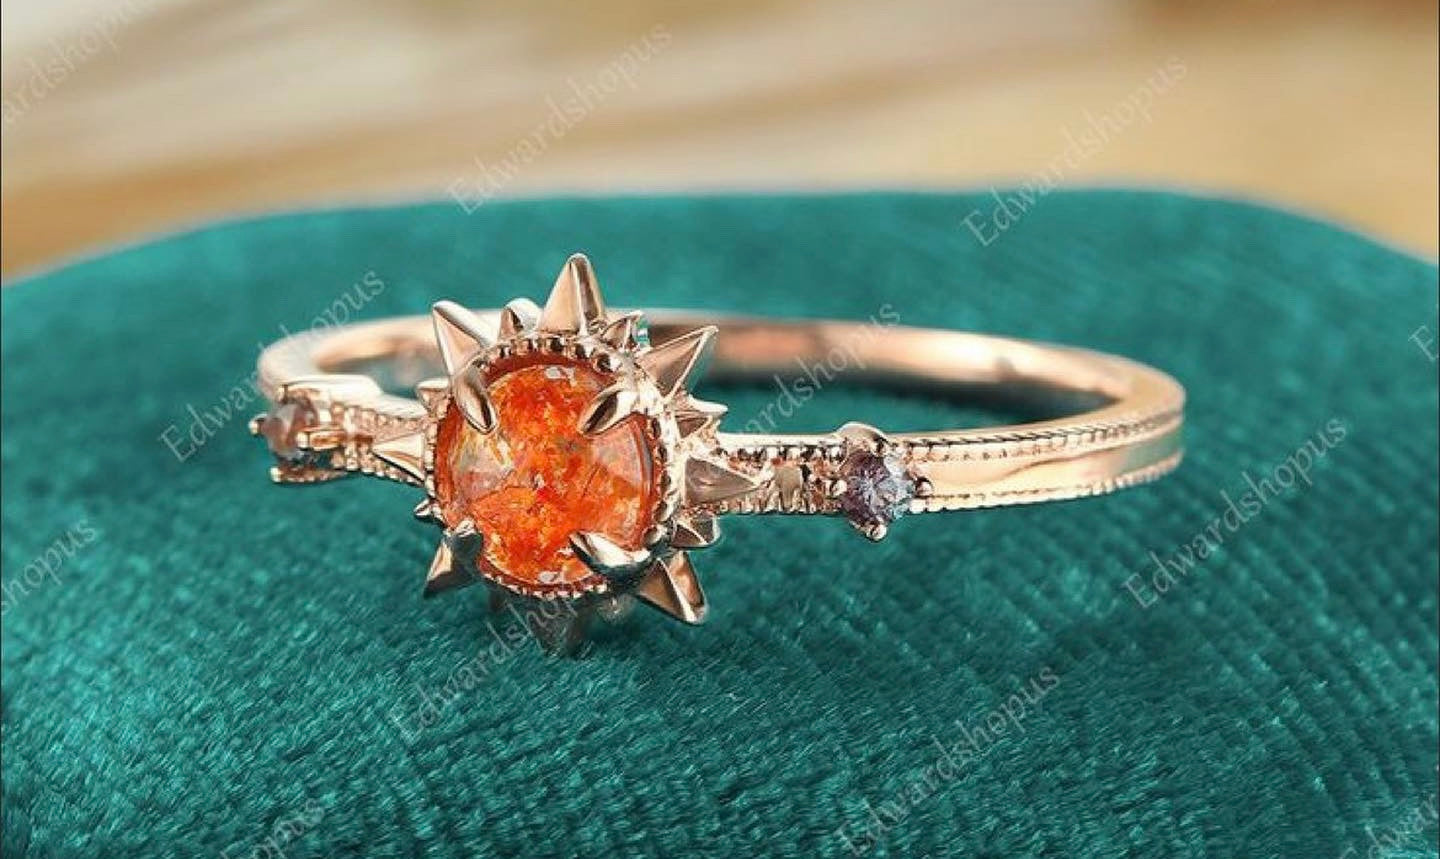 Custom engagement ring set